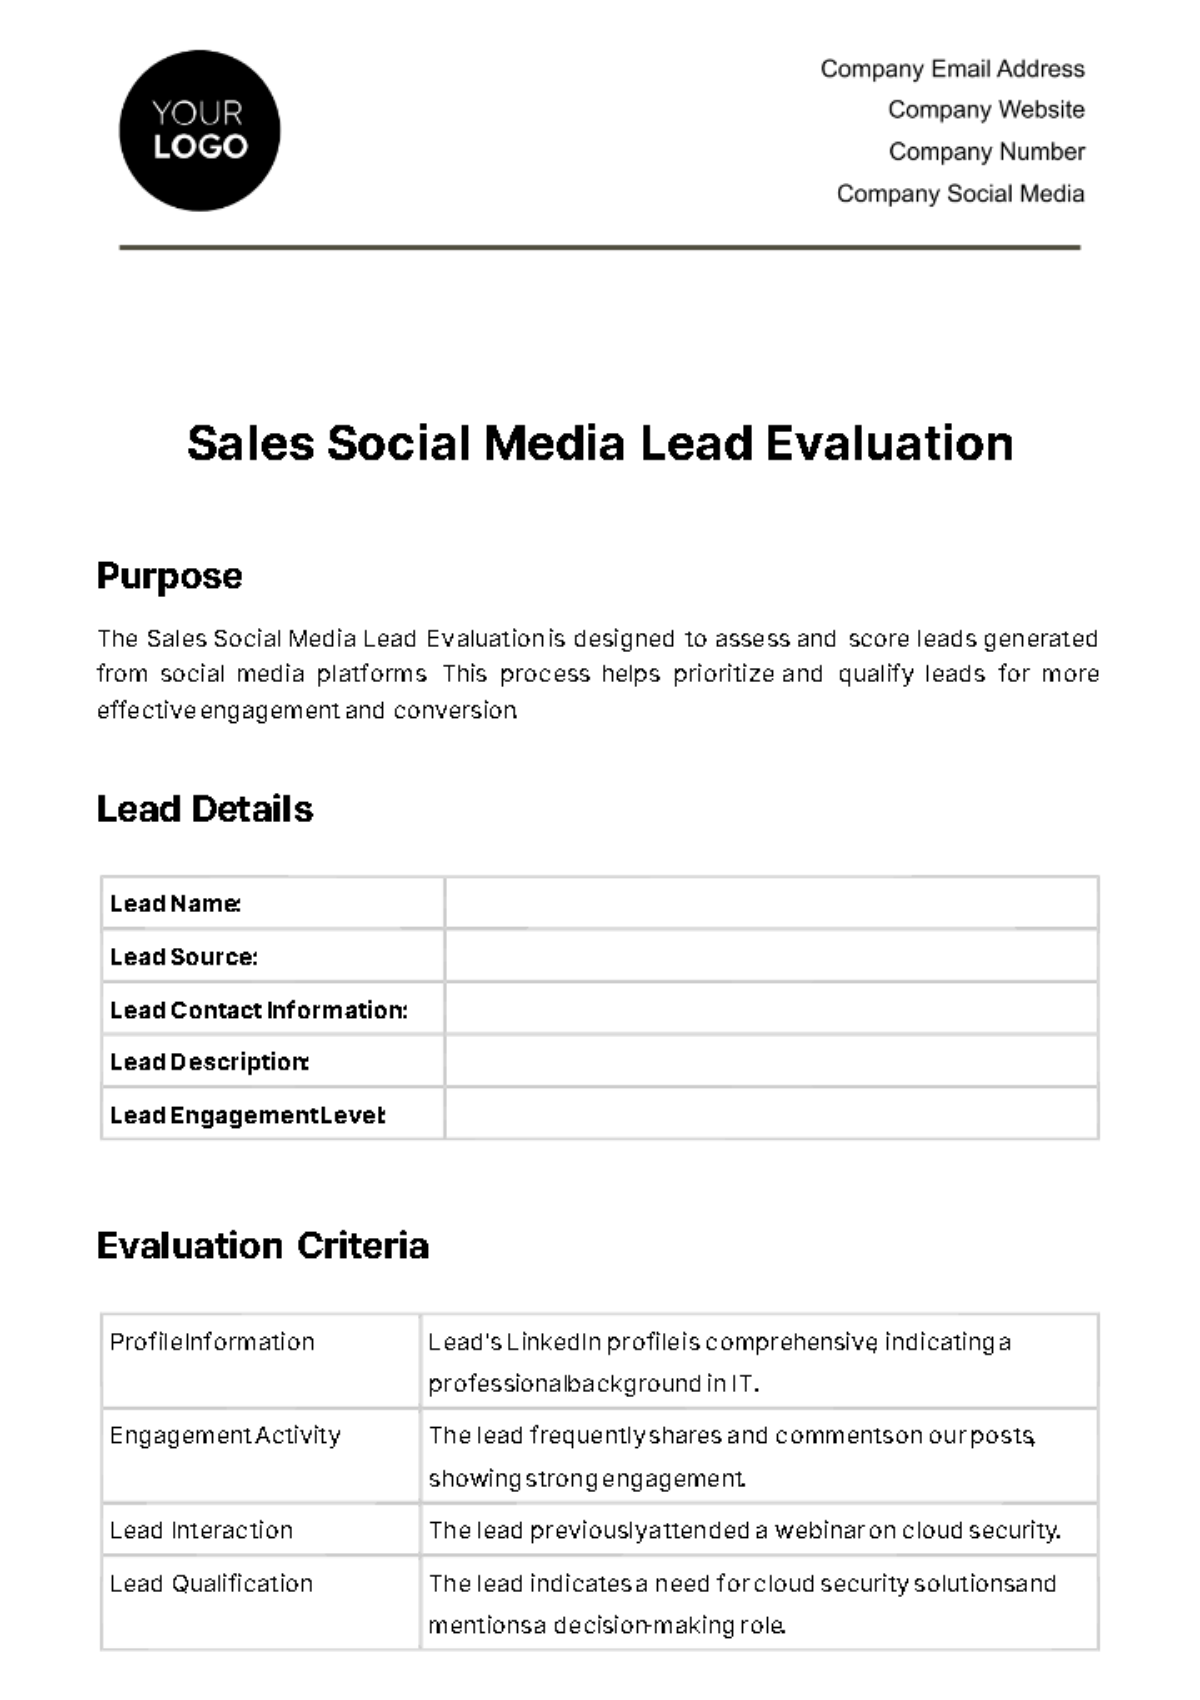 Free Sales Social Media Lead Evaluation Template